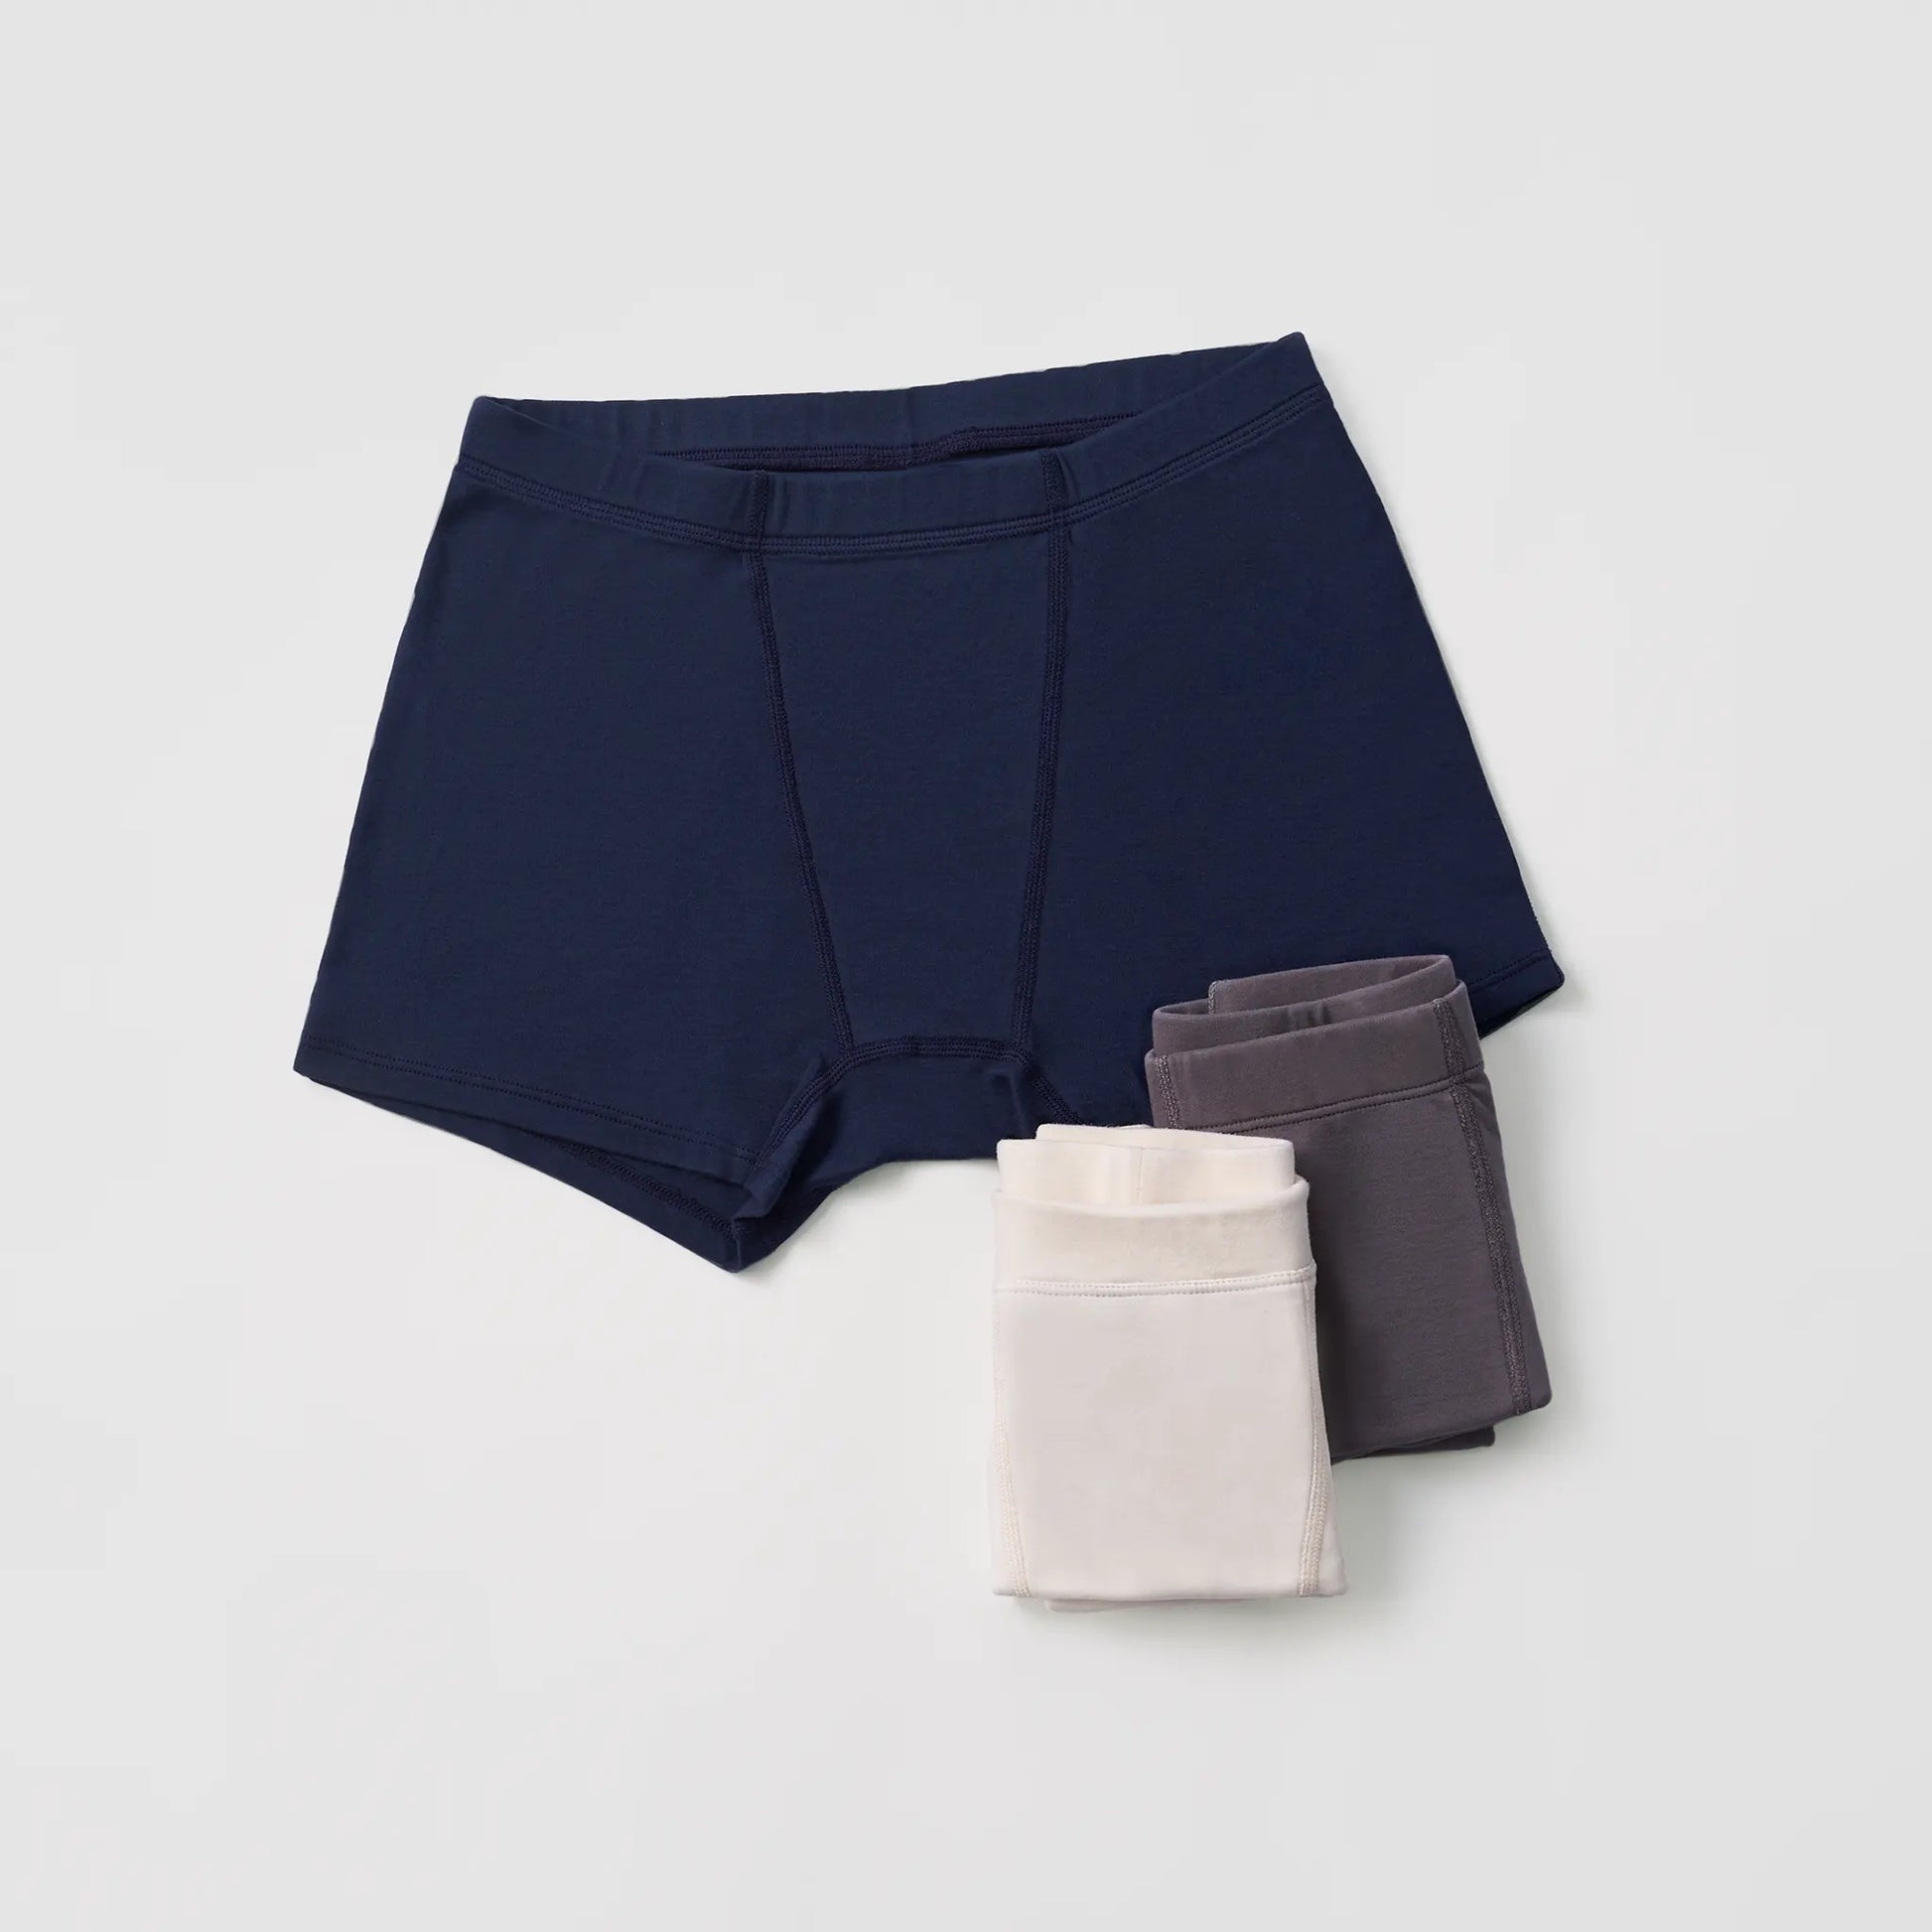 Supreme Boxer Shorts/Underwear Men’s Box of 3